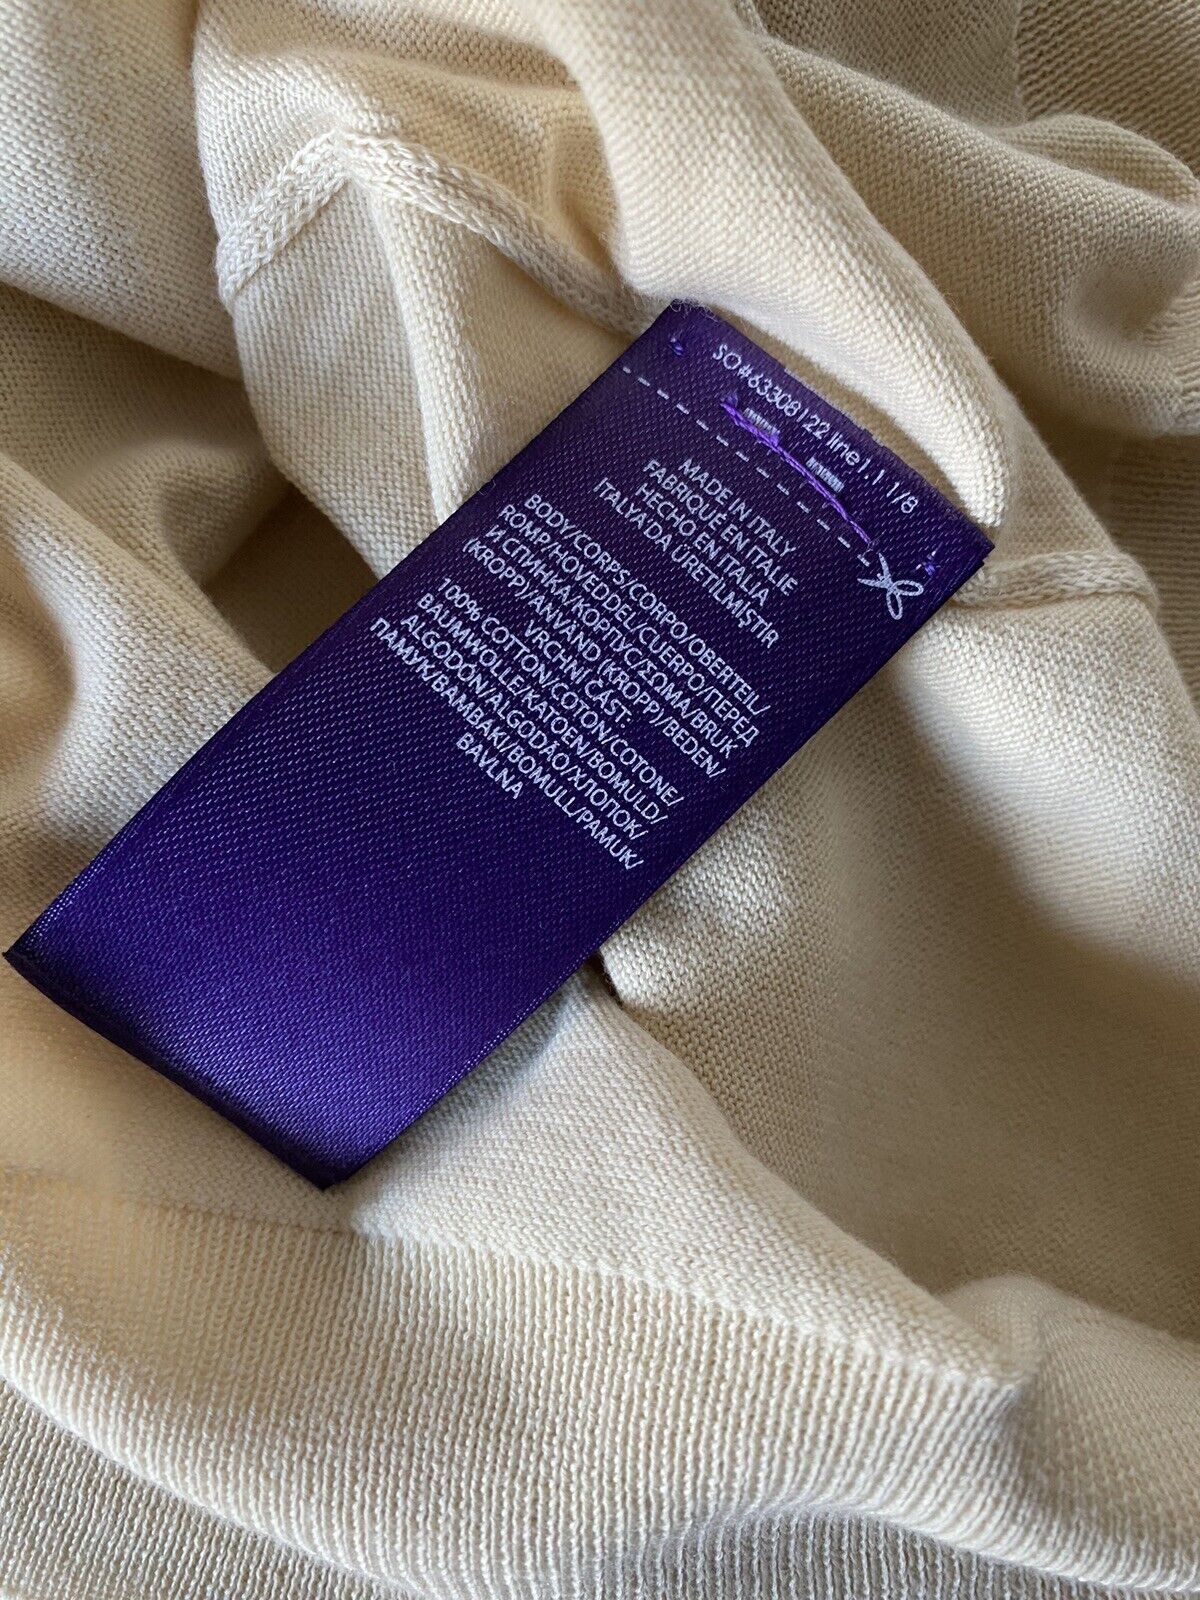 NWT $695 Polo Ralph Lauren Purple Label Men's Cotton Cream Sweater L Italy